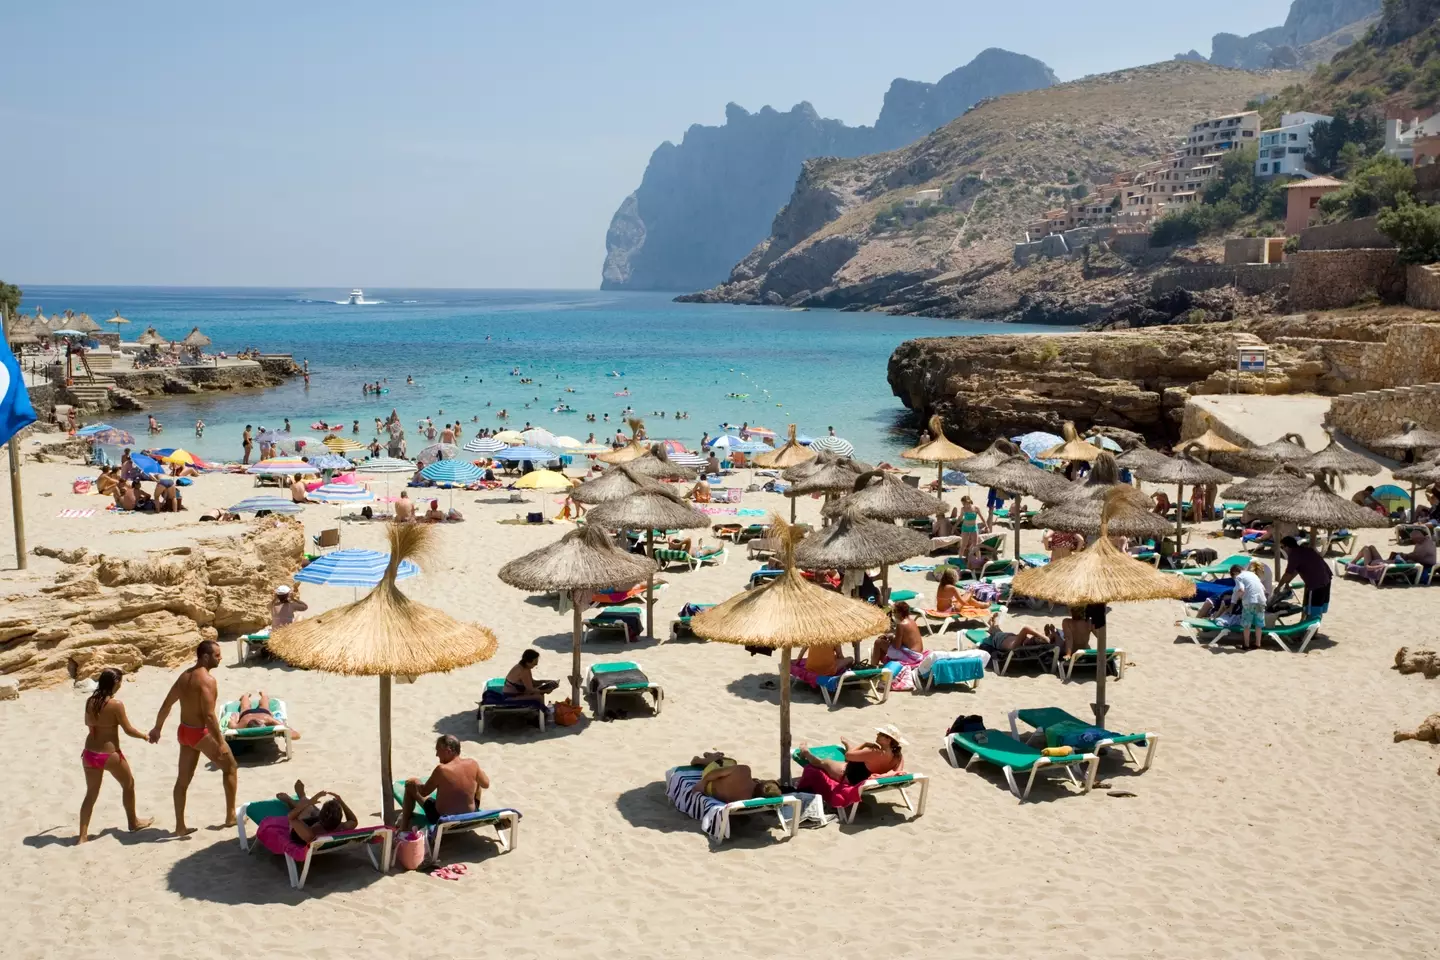 A beach in Majorca.